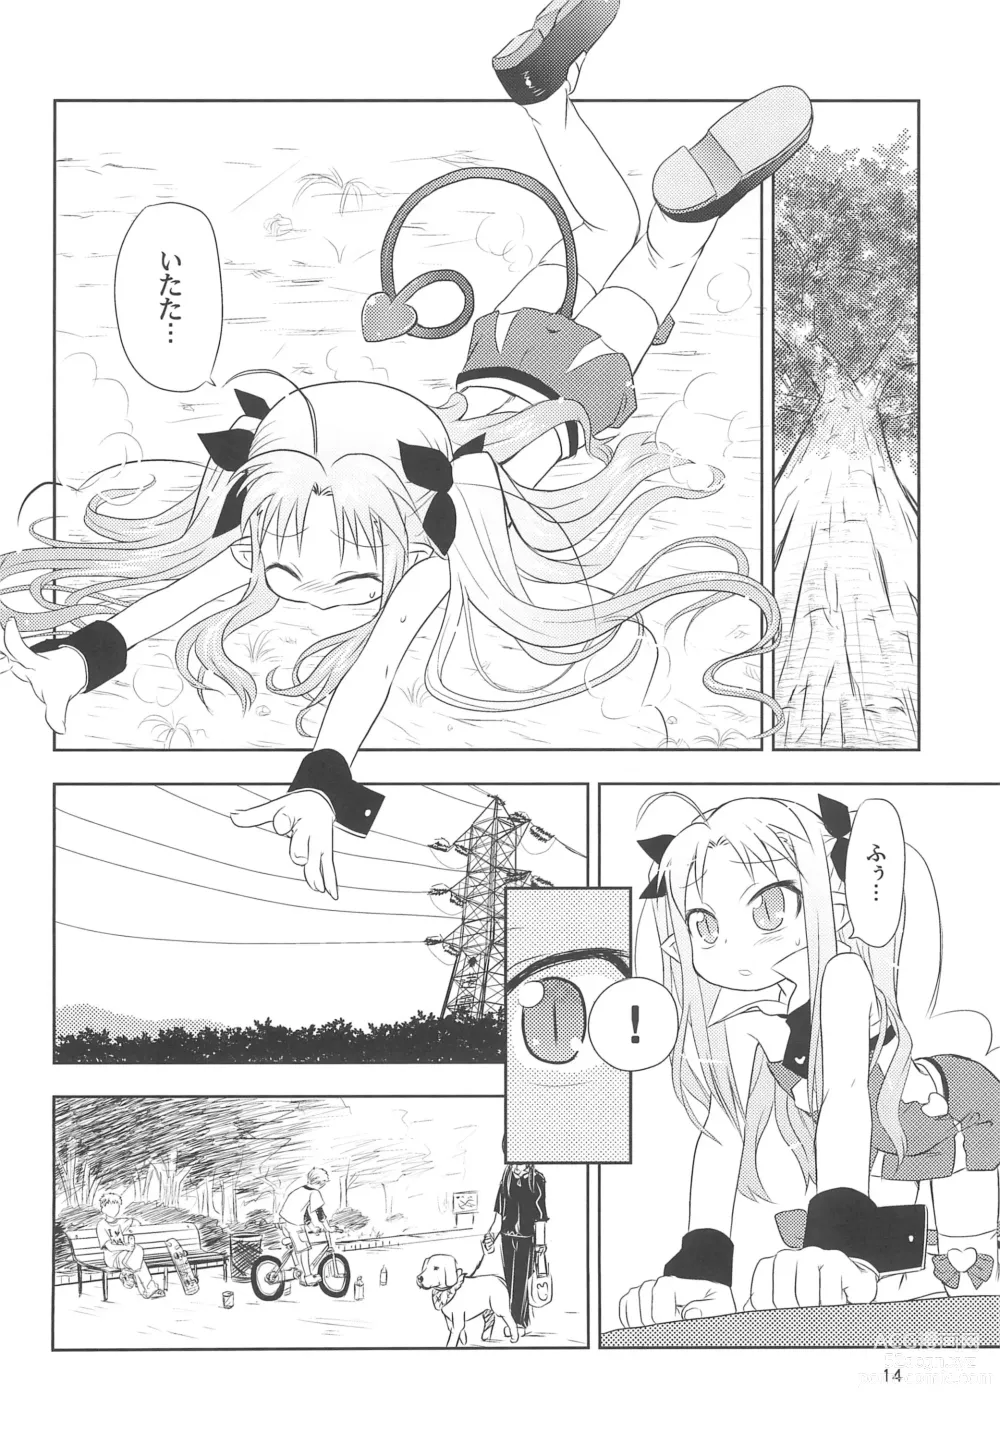 Page 14 of doujinshi Maigo no Maigo no Hime-sama Plus